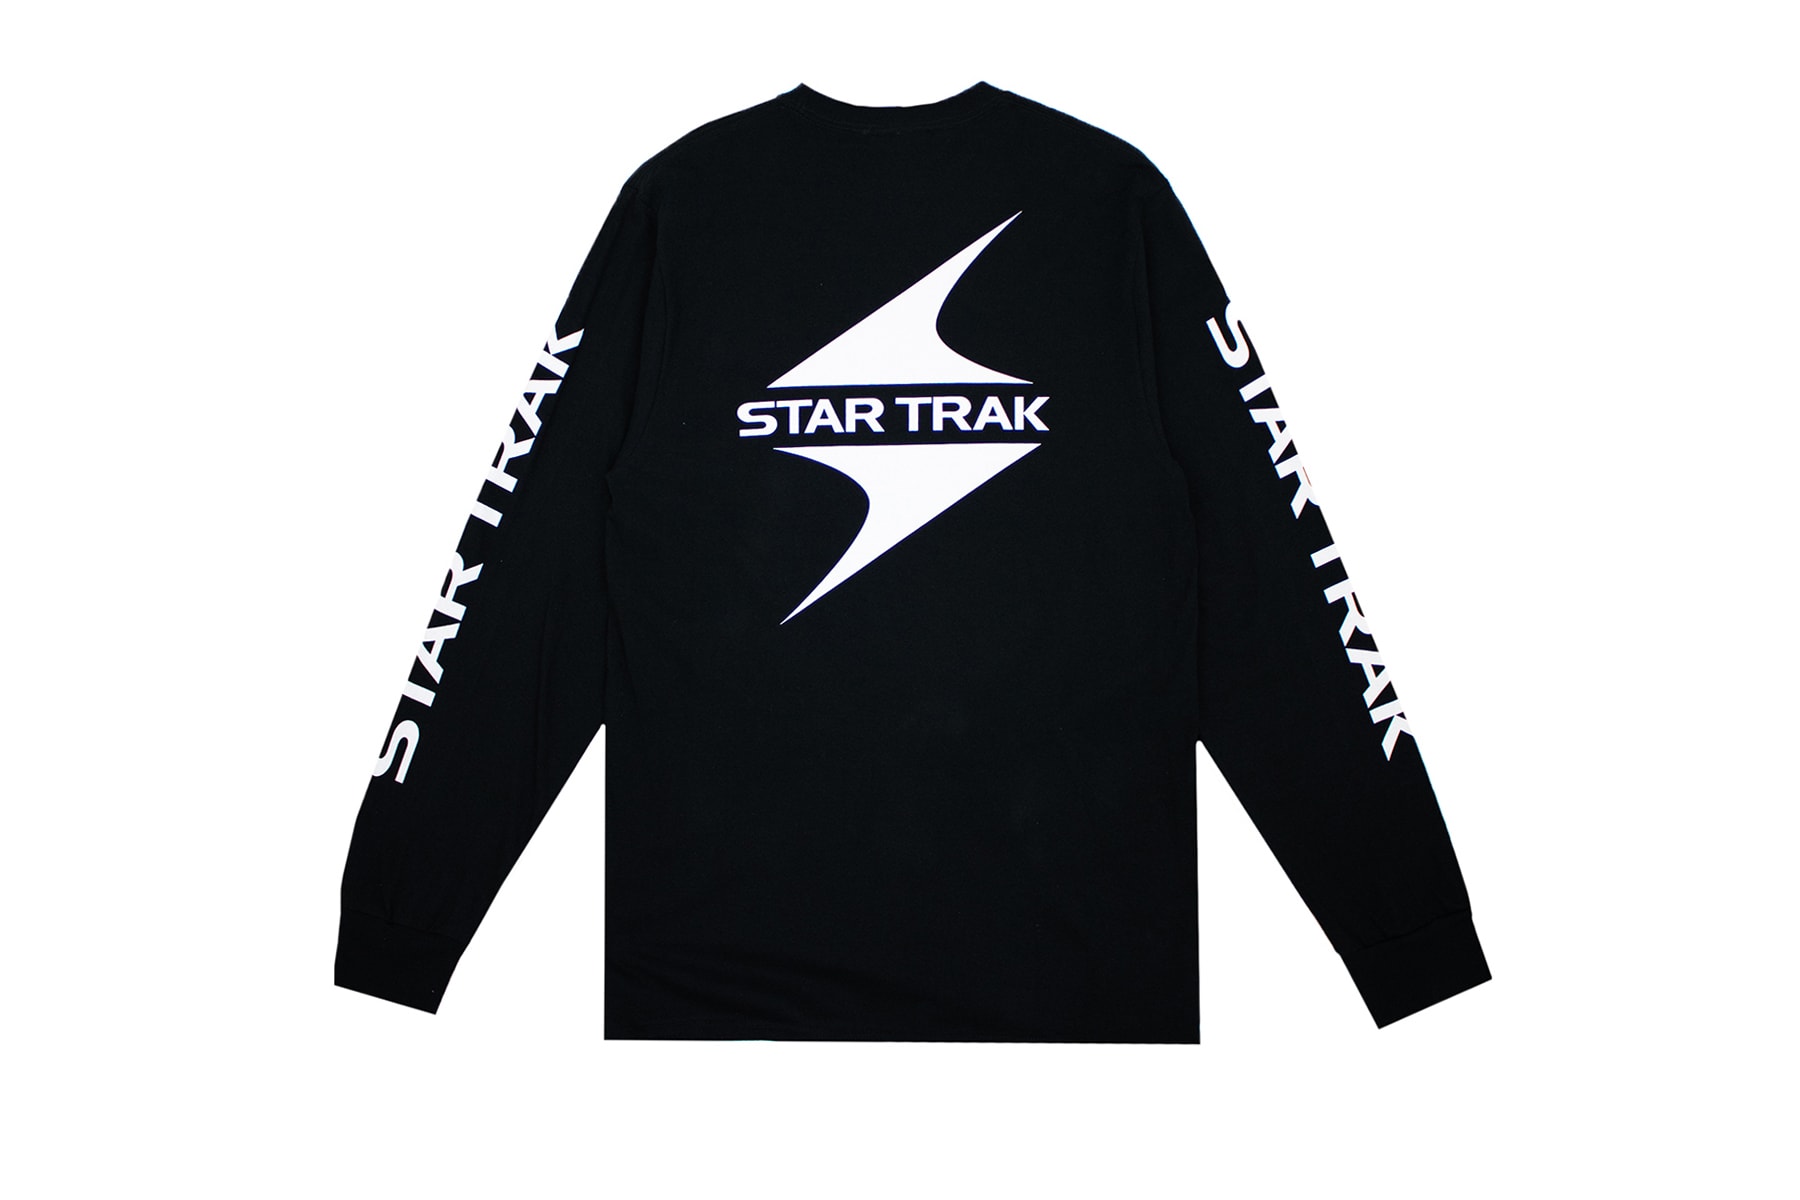 star trak billionaire boys club collaboration collection white long sleeve tee shirt black logo